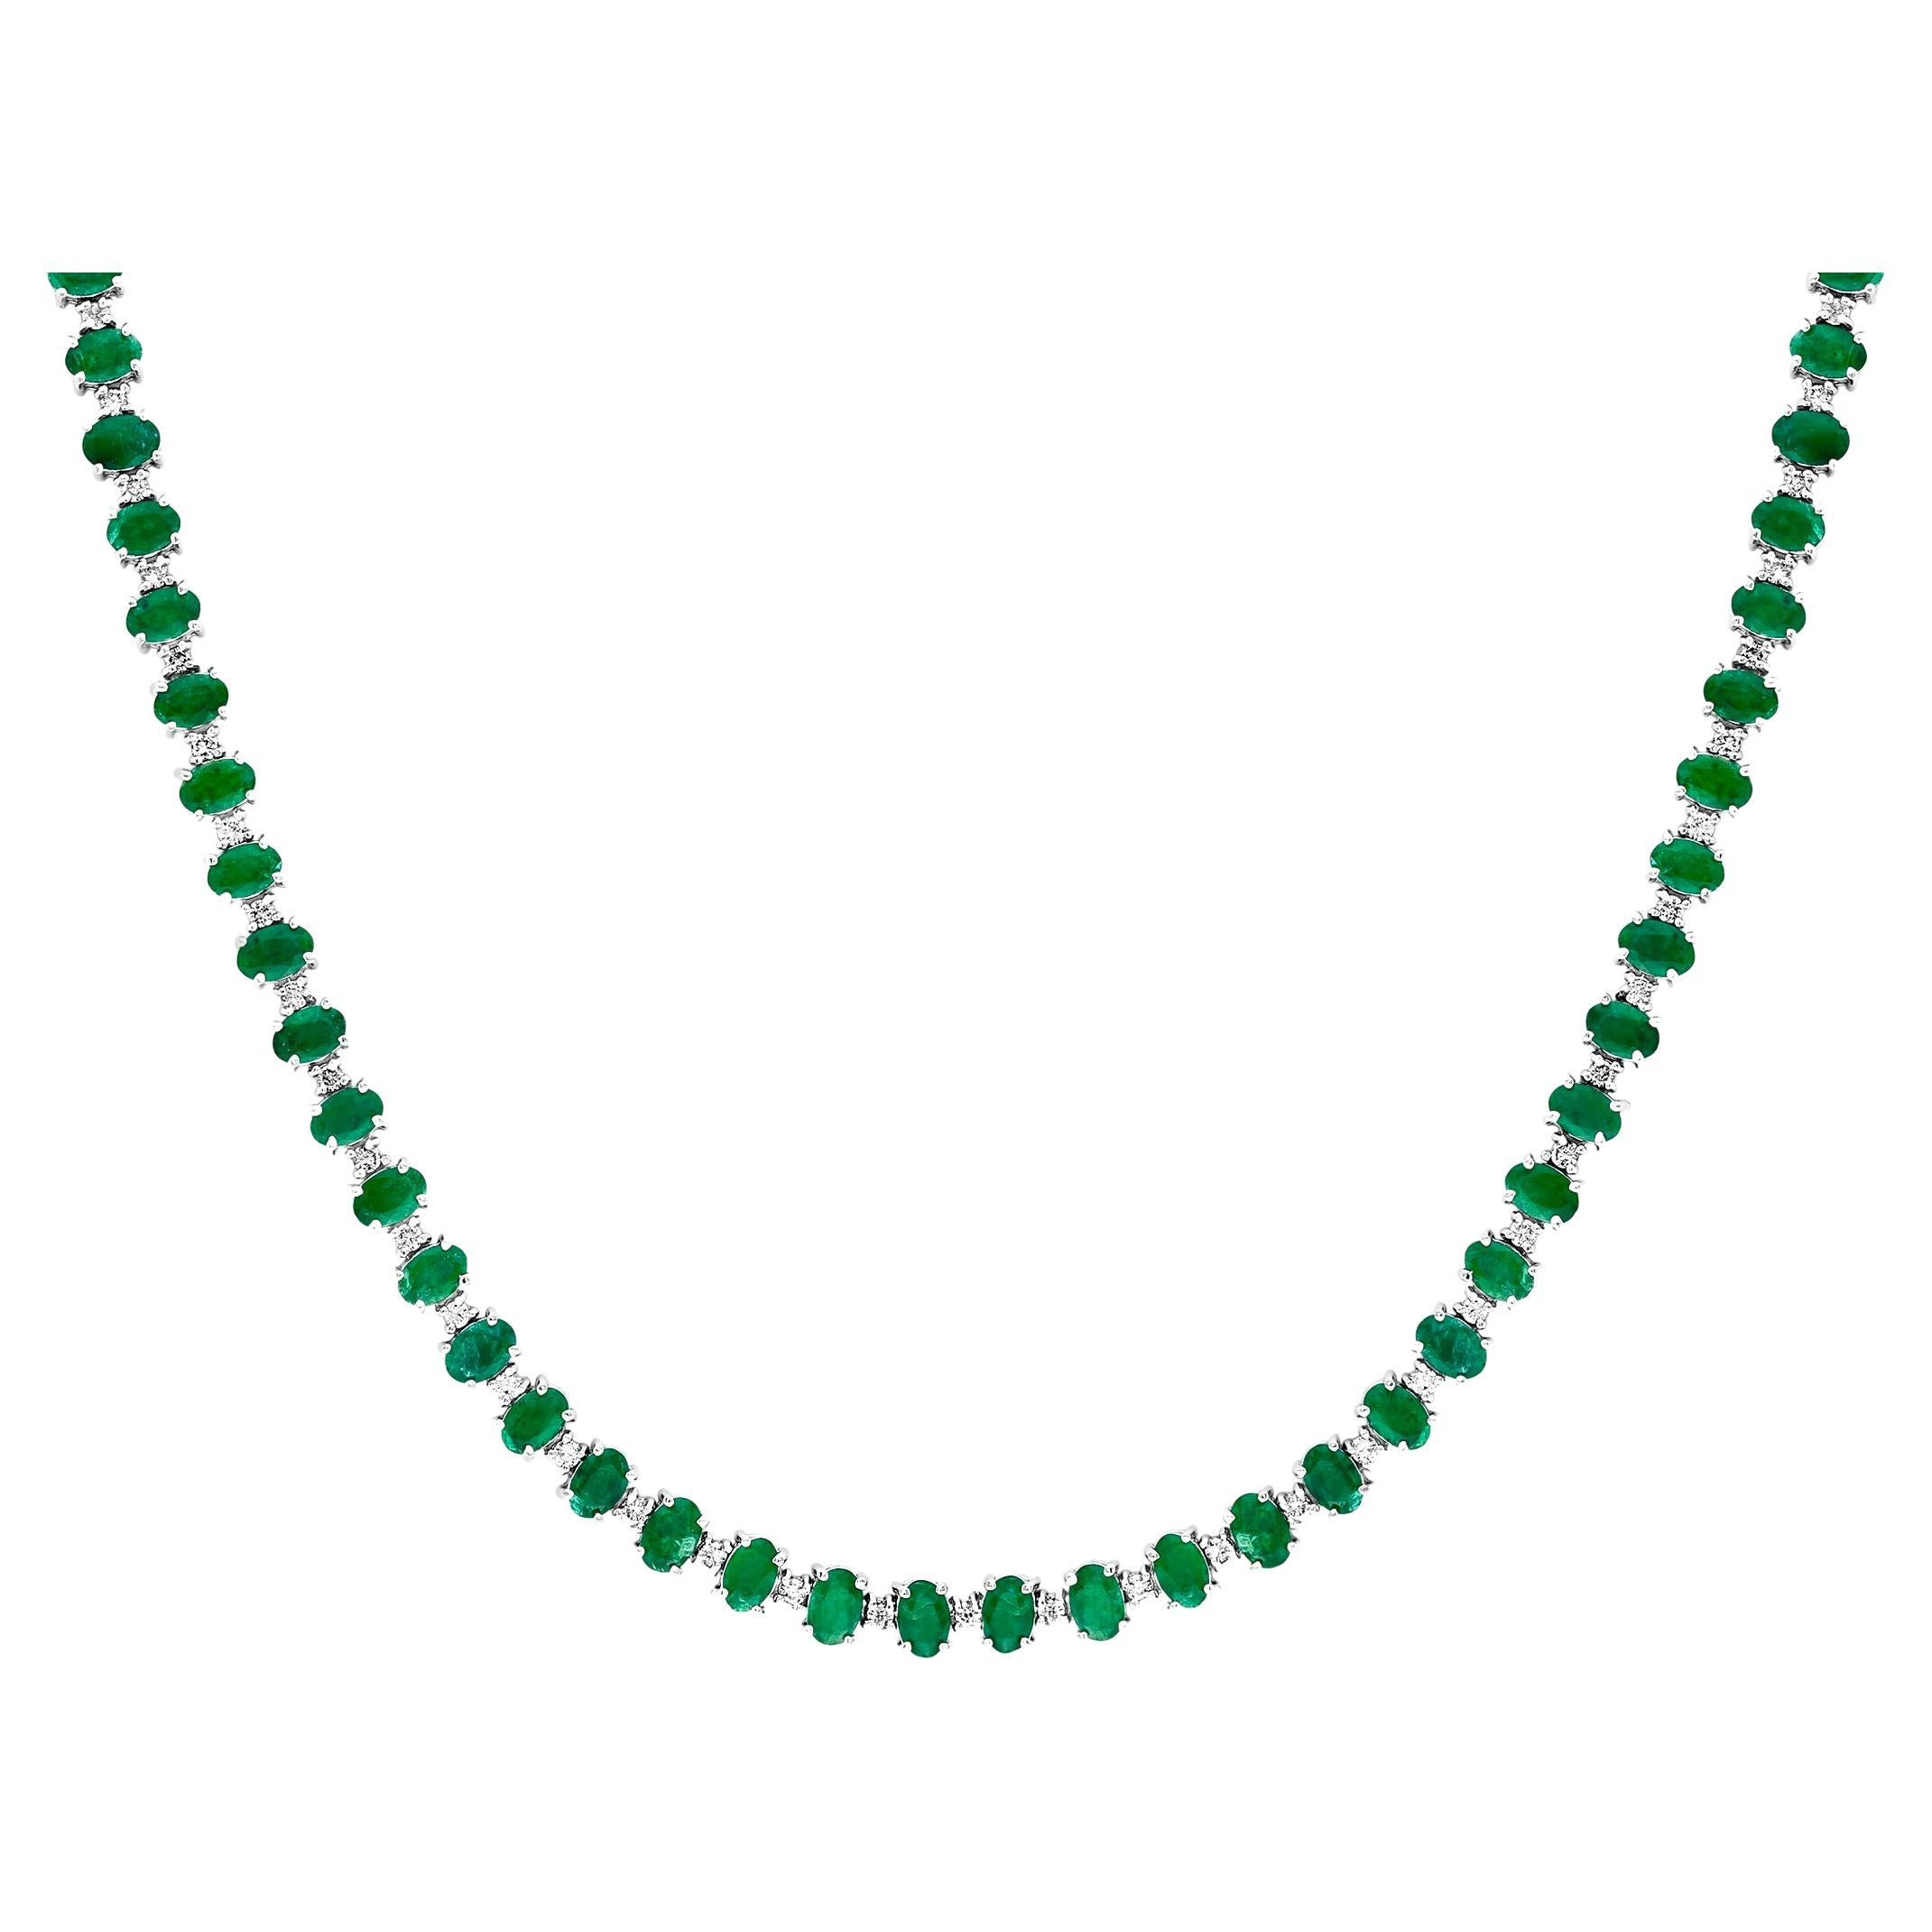 35 Carat Oval Brazilian Emerald & 3 Carat Diamond Tennis Necklace 14KWG